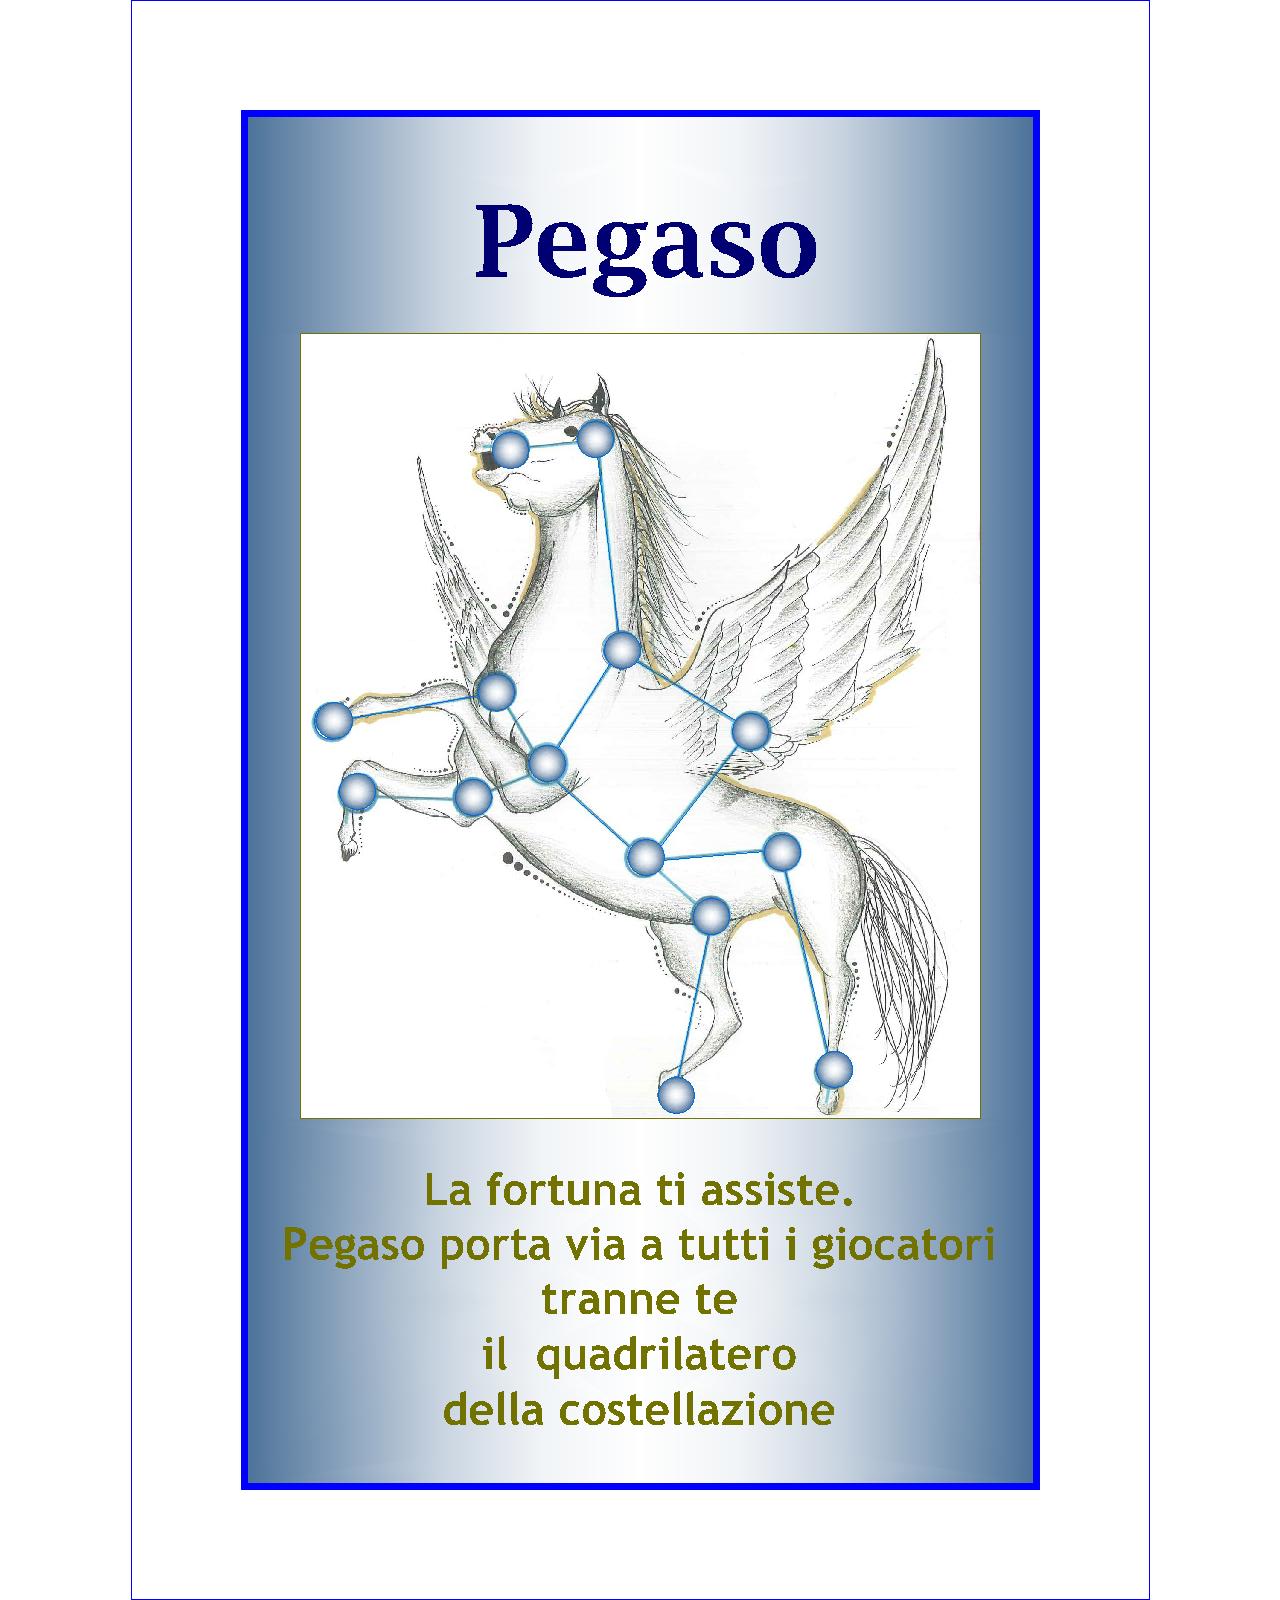 019. Pegaso-Model (Coach M.C. Petroli)